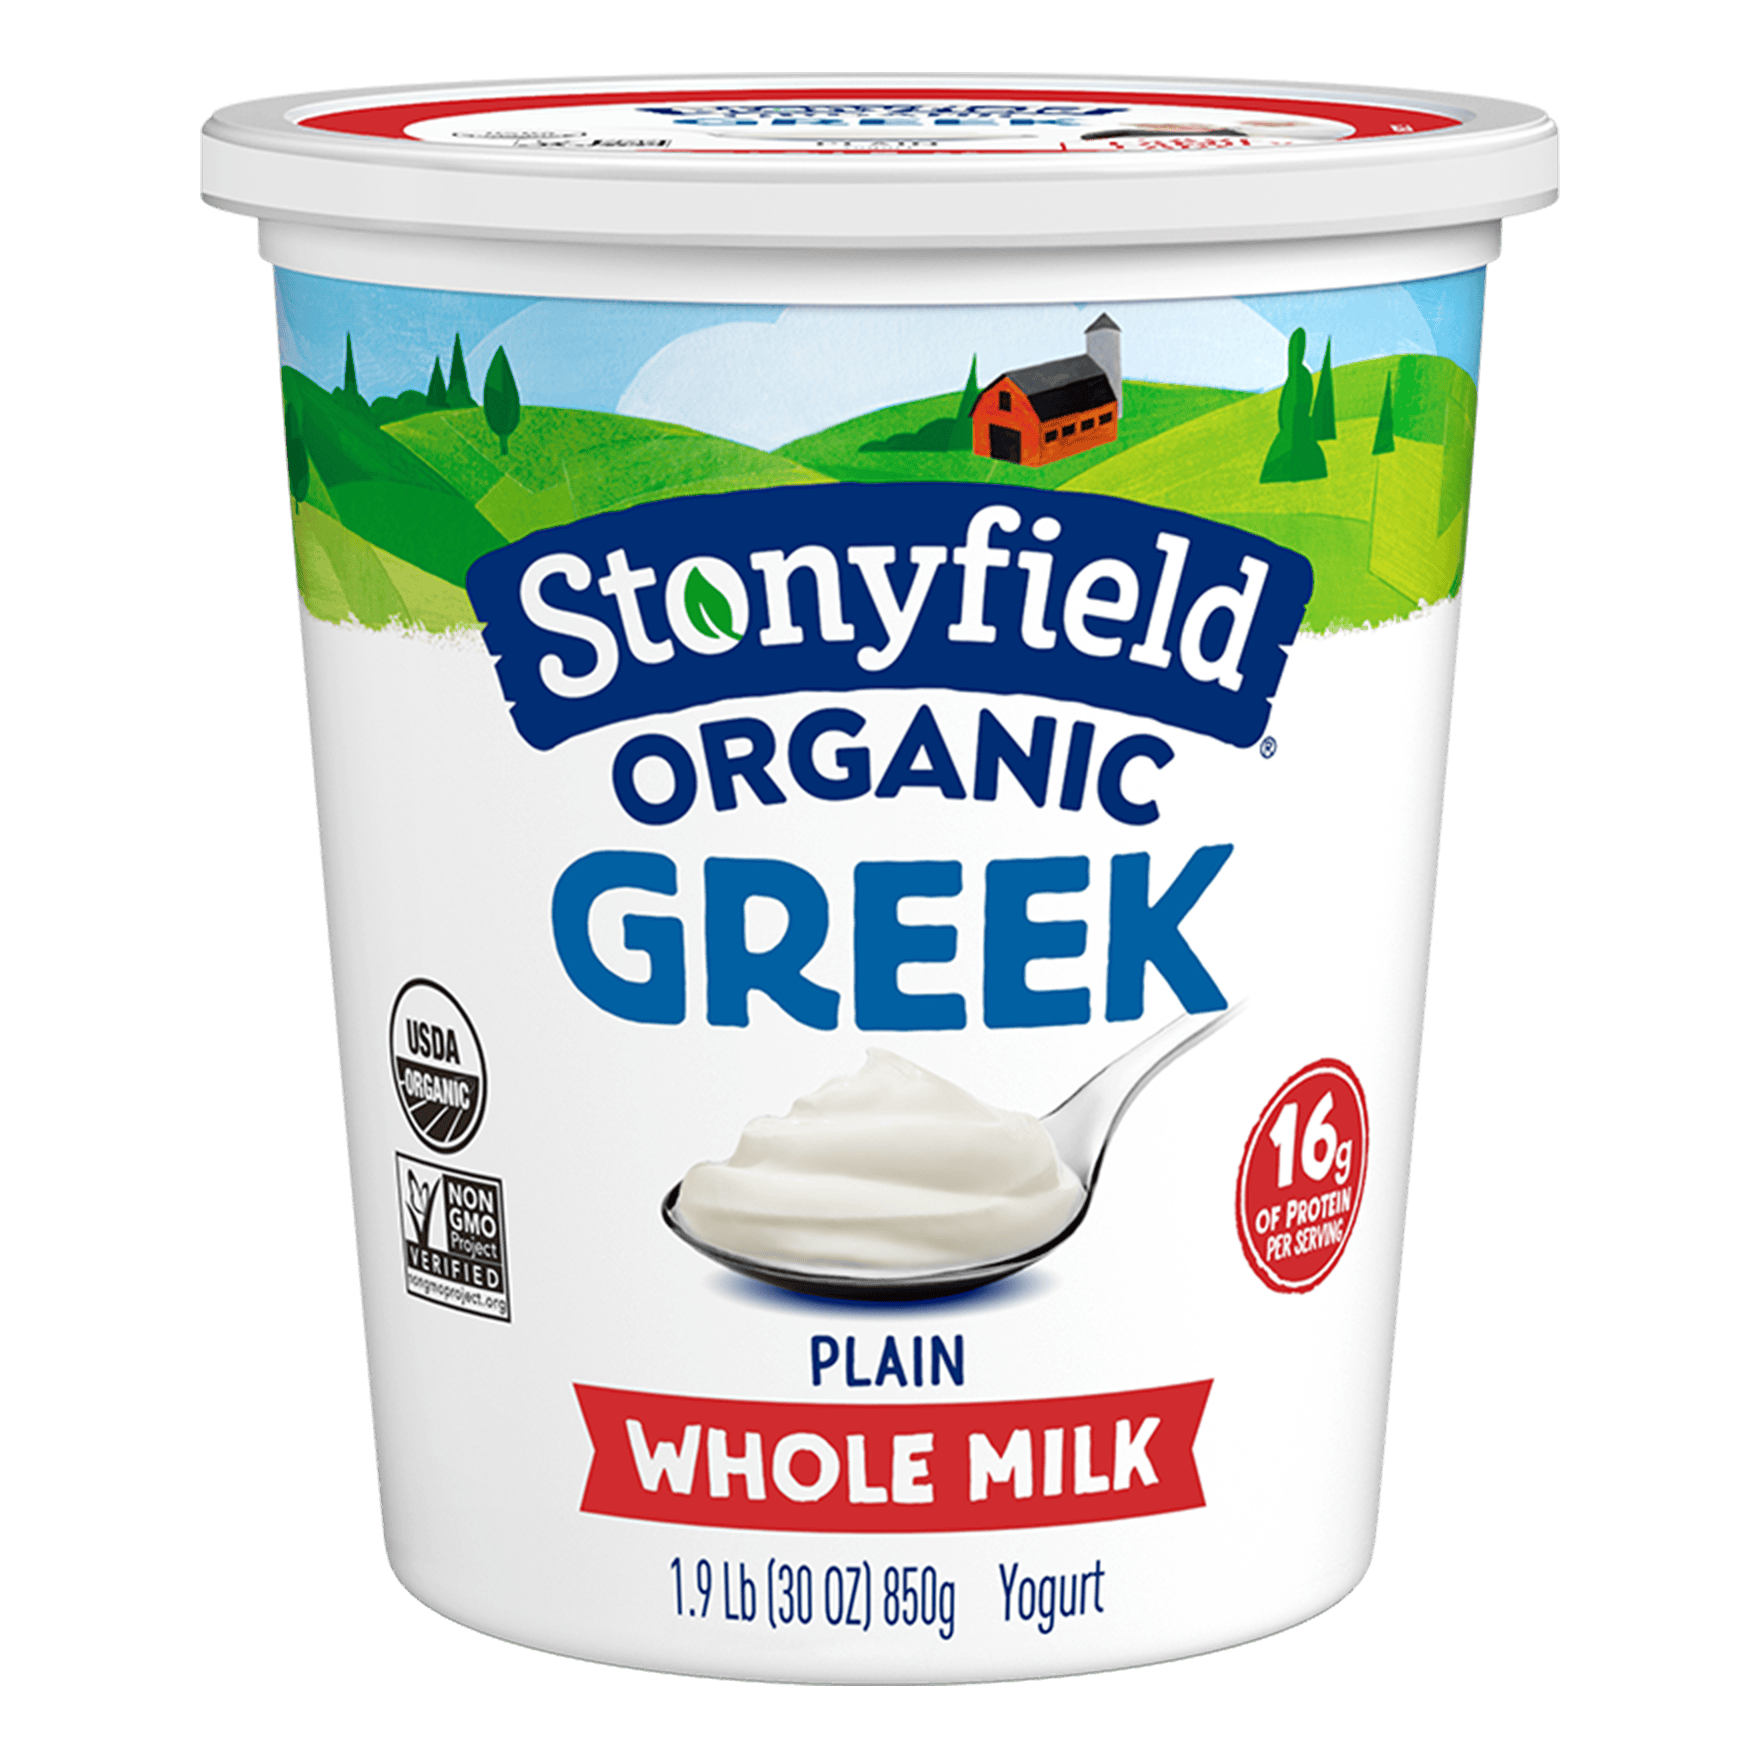 Stonyfield Organic Greek Whole Milk Yogurt front